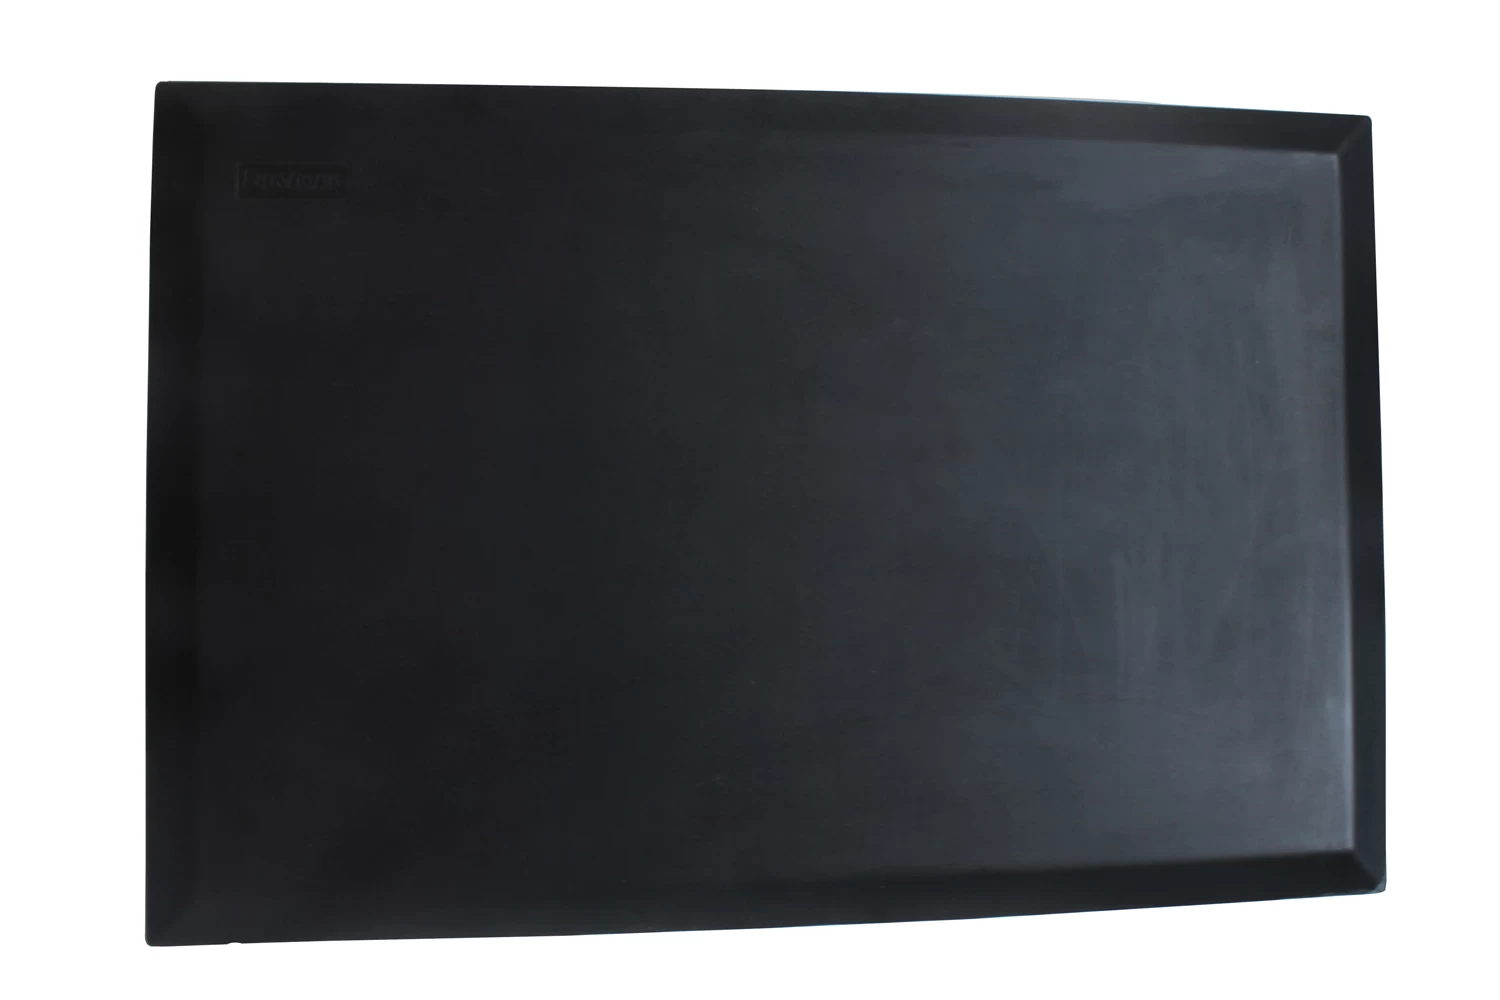 Polyurethane black foam anti slip pad for kitchen